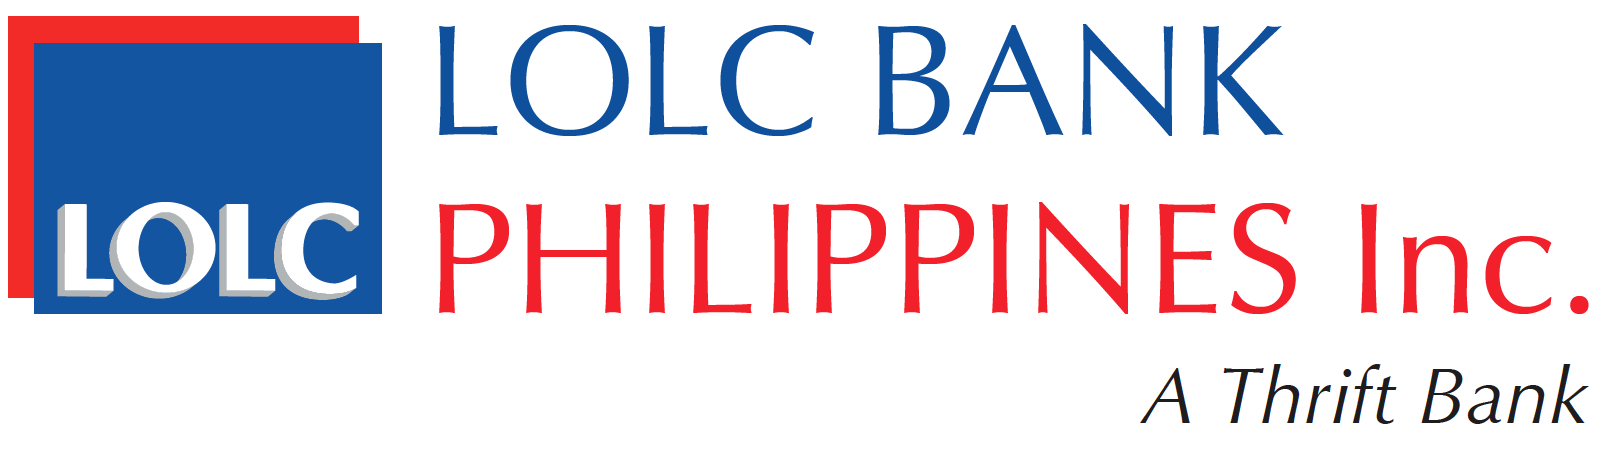 LOLC BANK PHILIPPINES INC